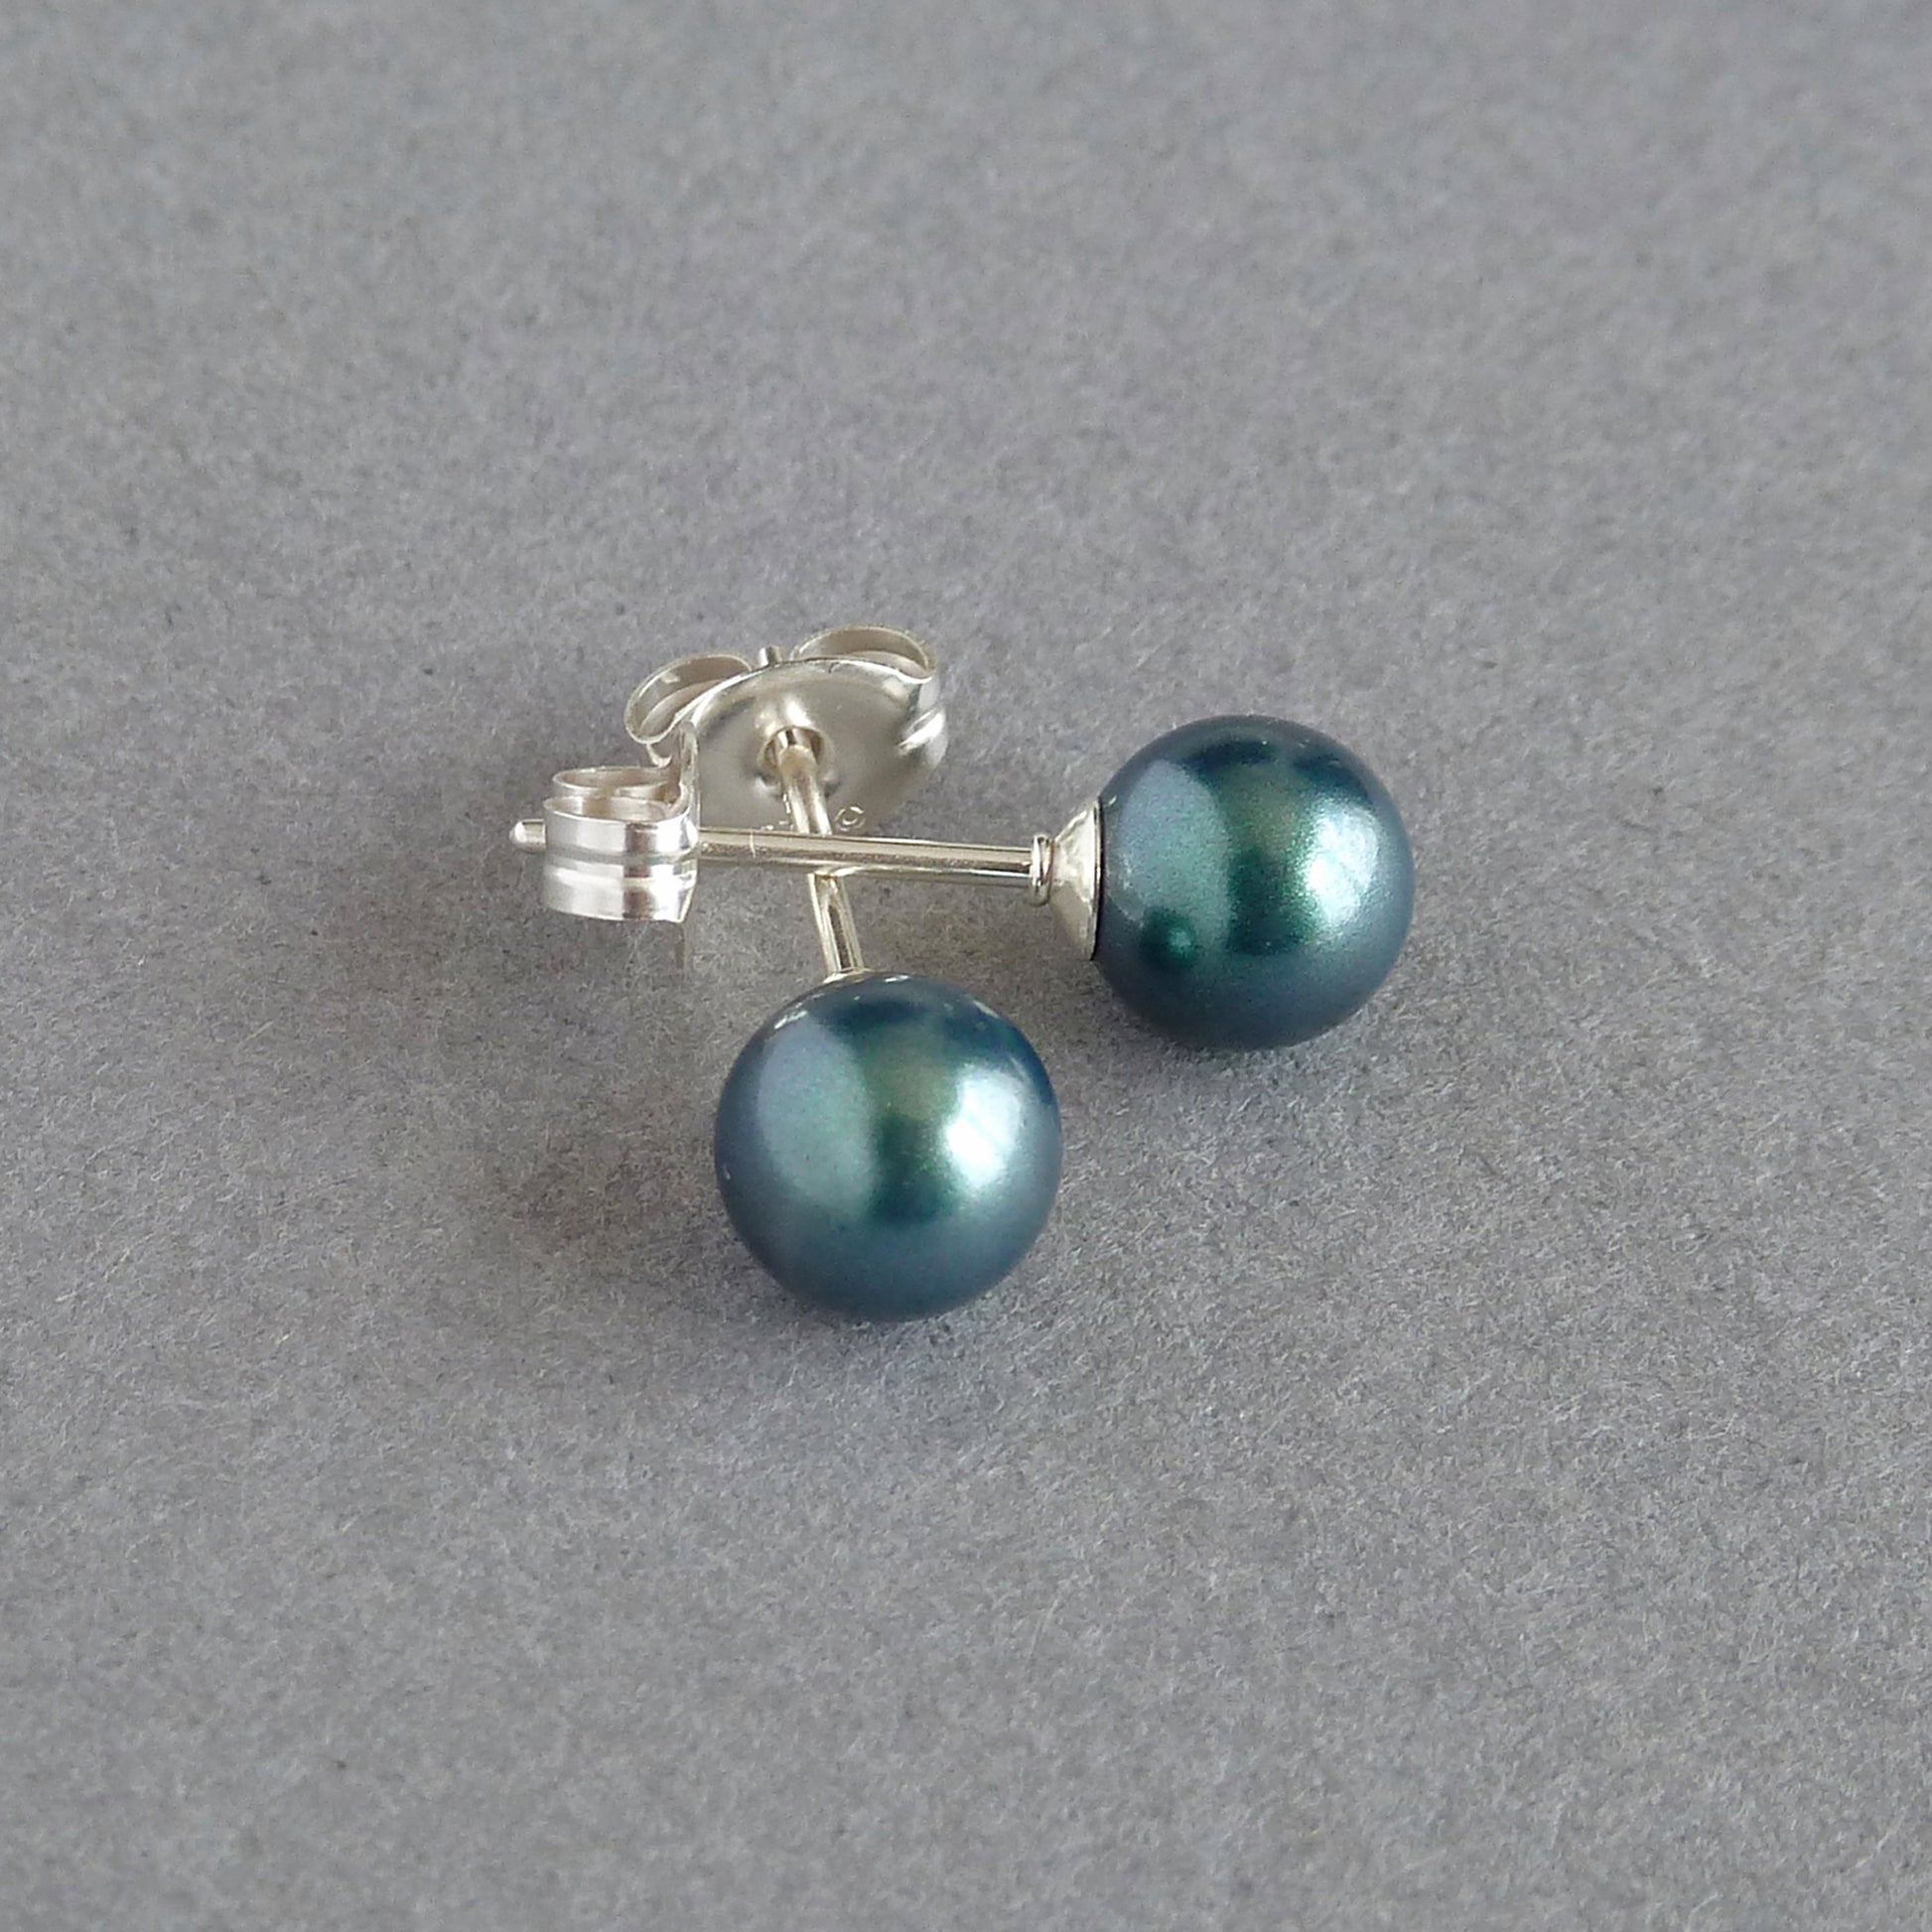 Small emerald green stud earrings